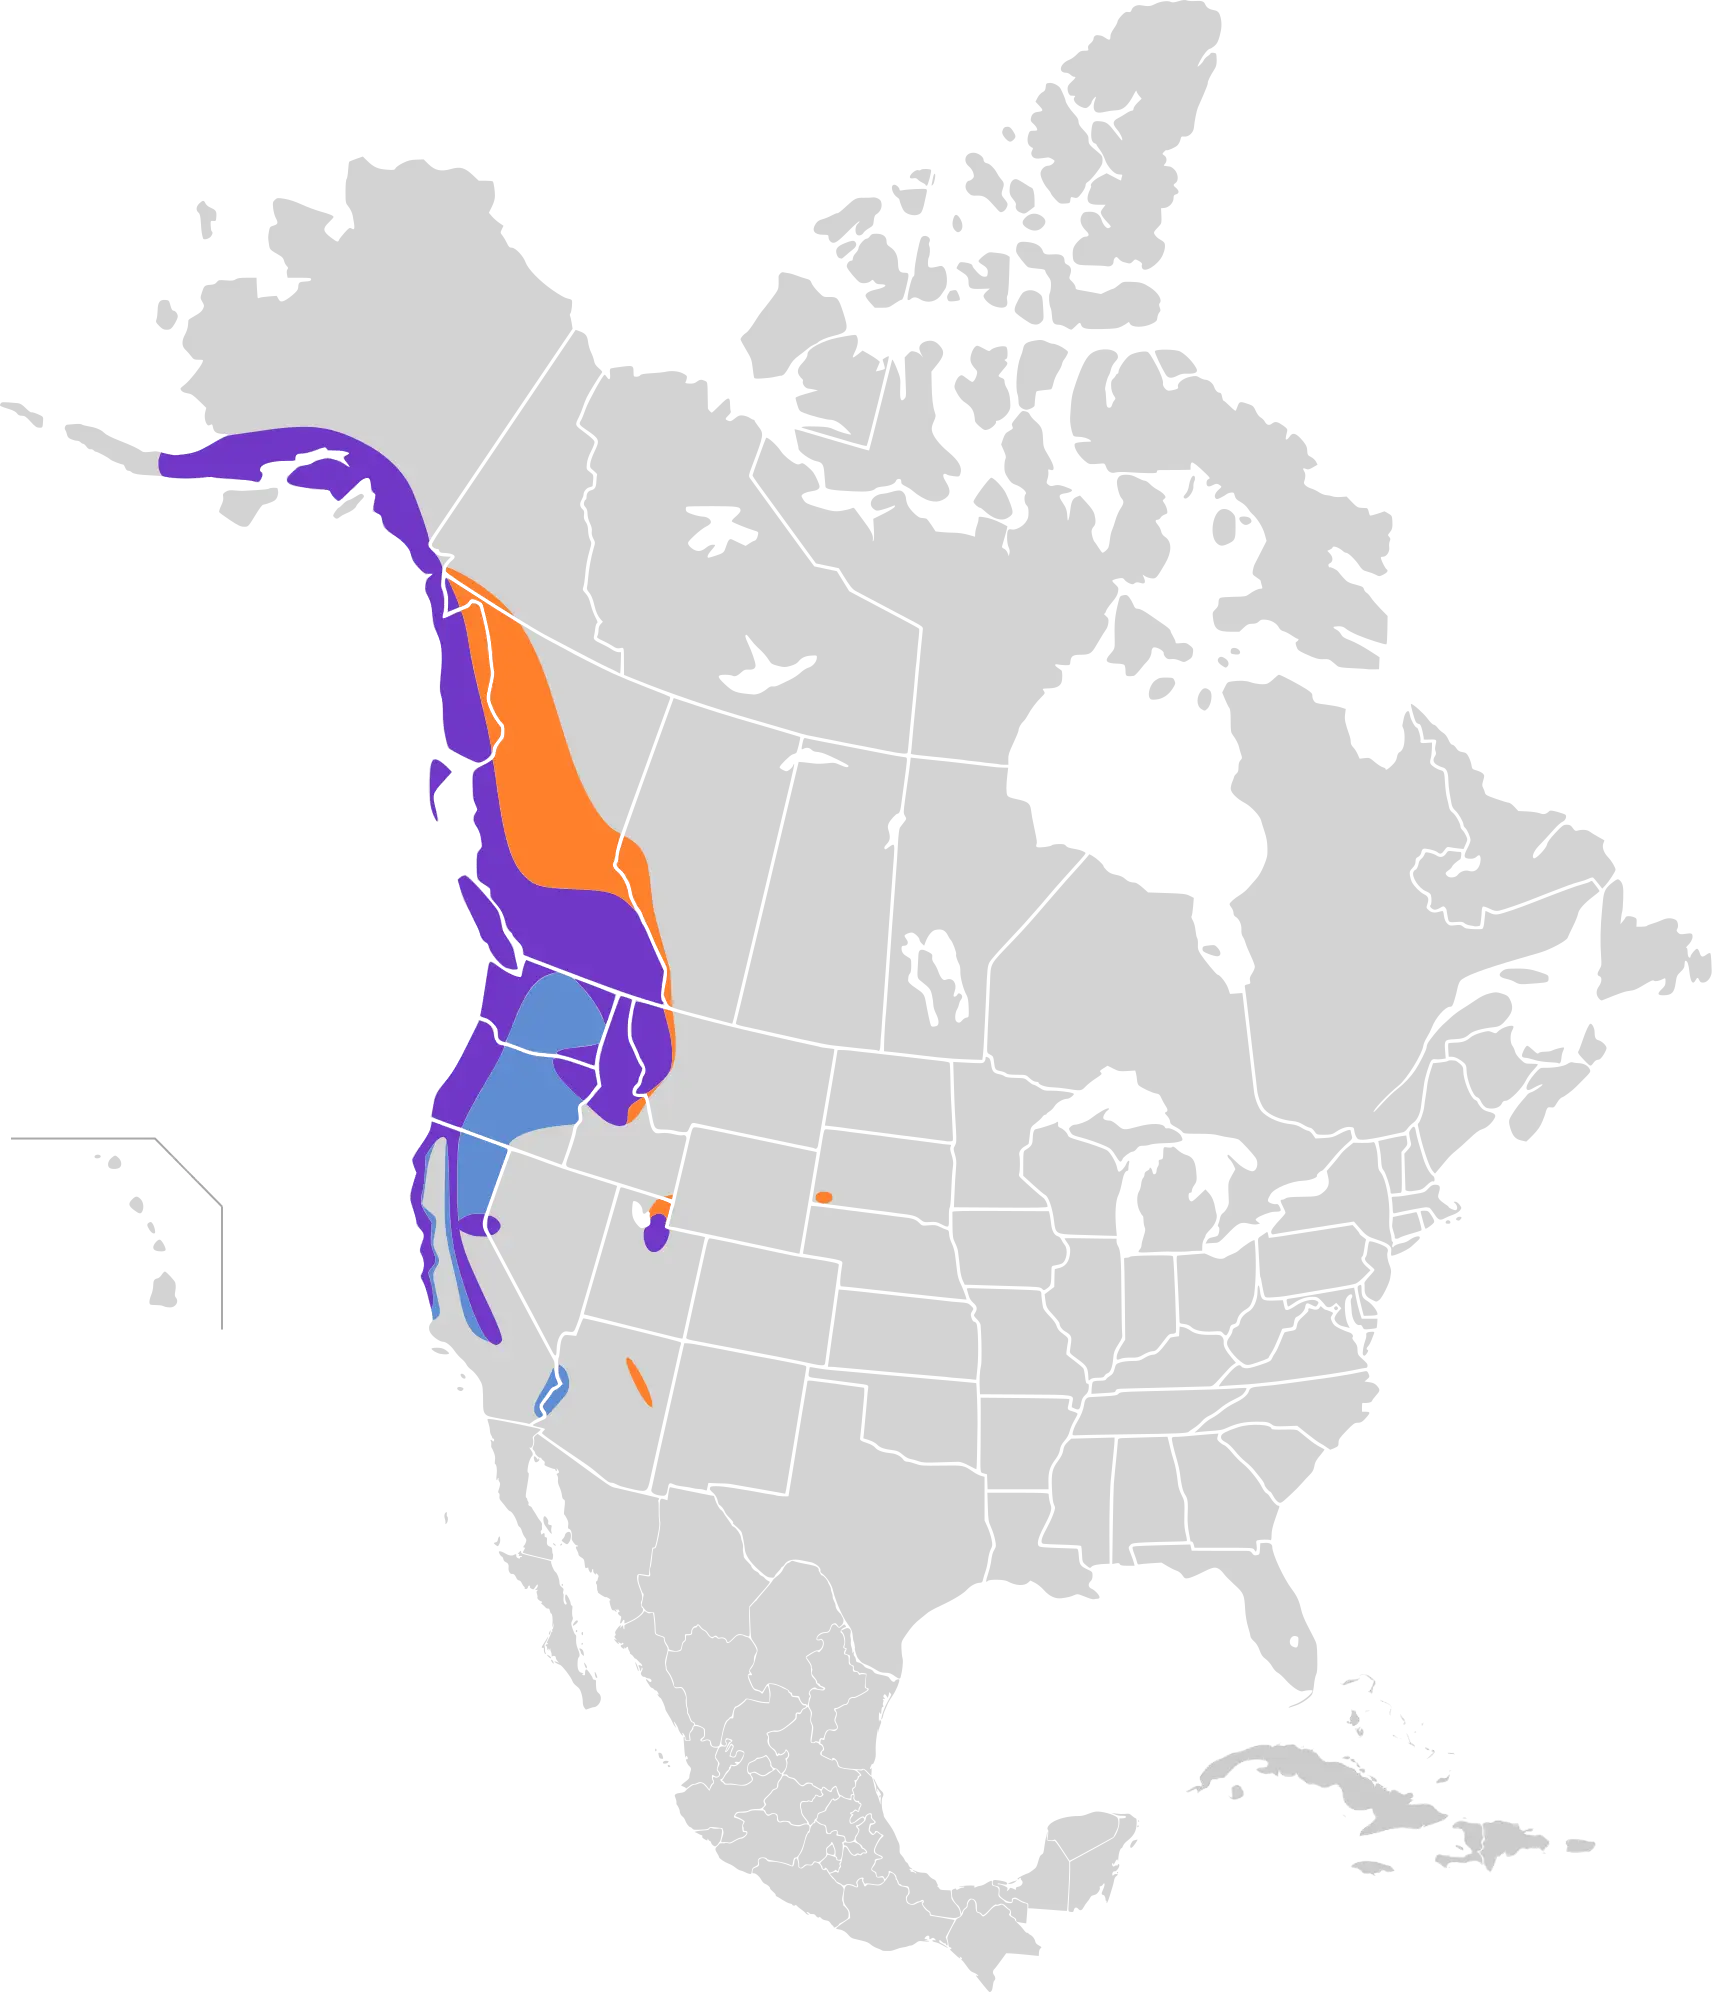 Pacific wren habitat map